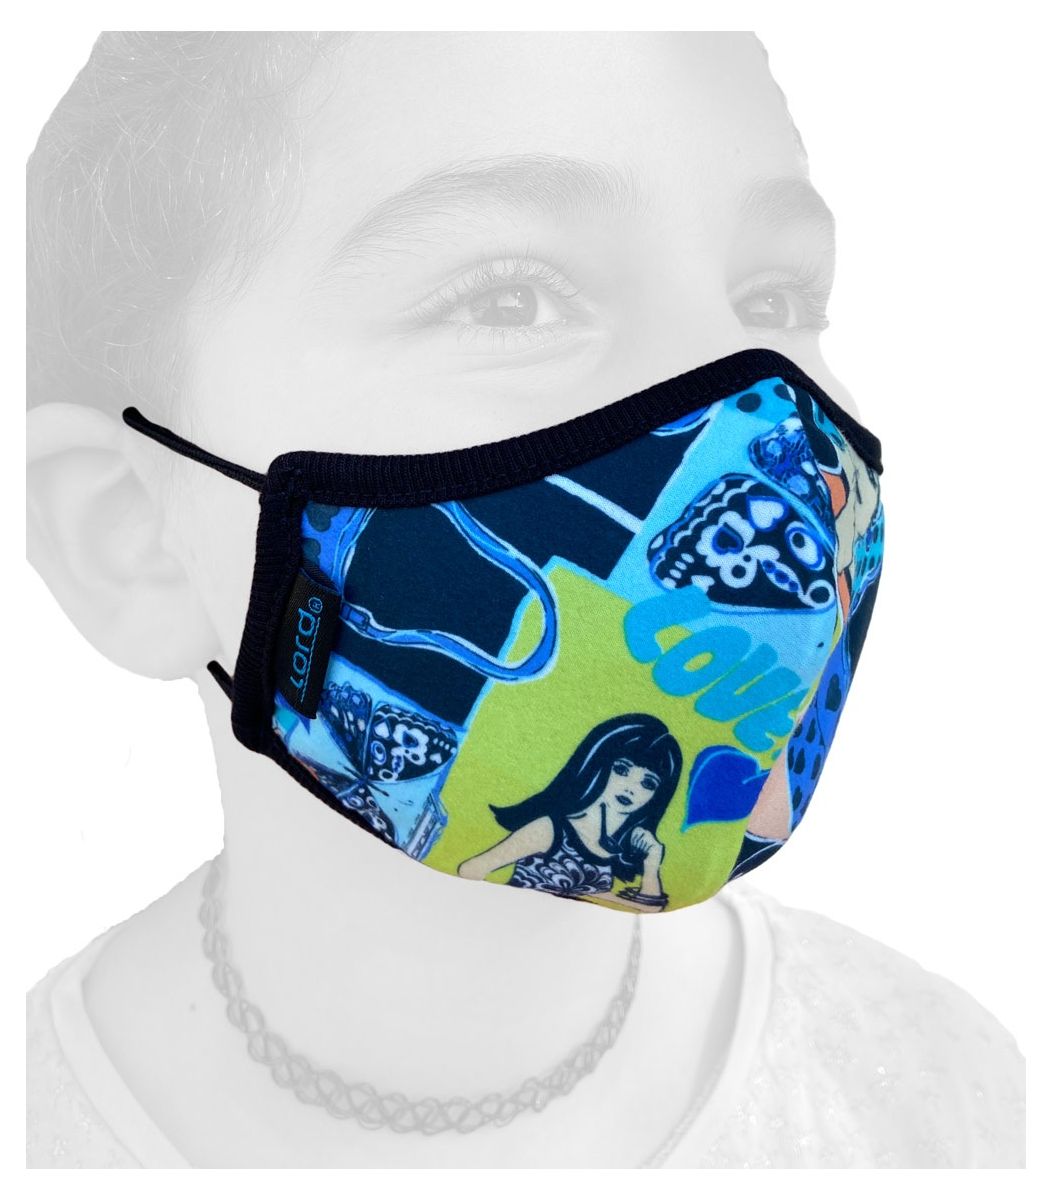 Children Mask, rubber band